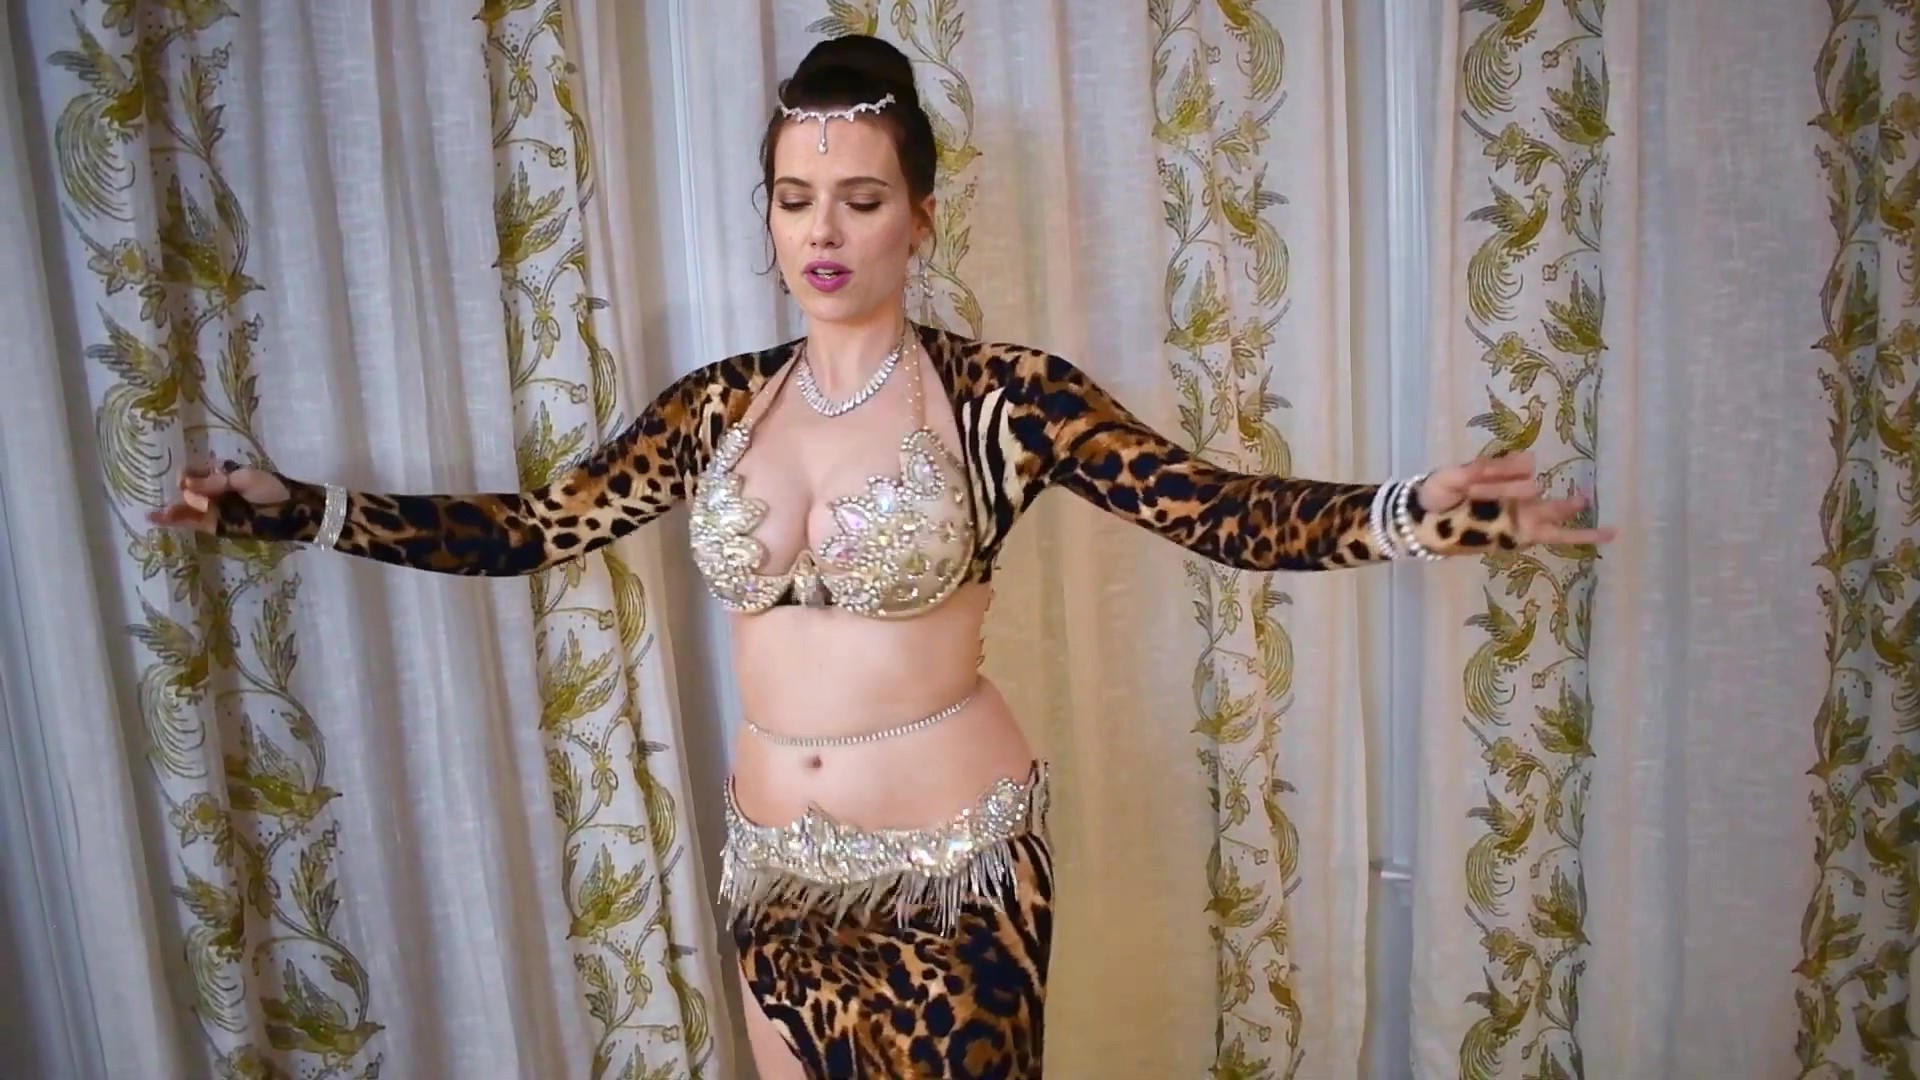 Porn Dans Open - Free Video Series: Fake Scarlett Johansson: Belly Dance -- FREE DOWNLOAD--  DeepFake Porn - MrDeepFakes